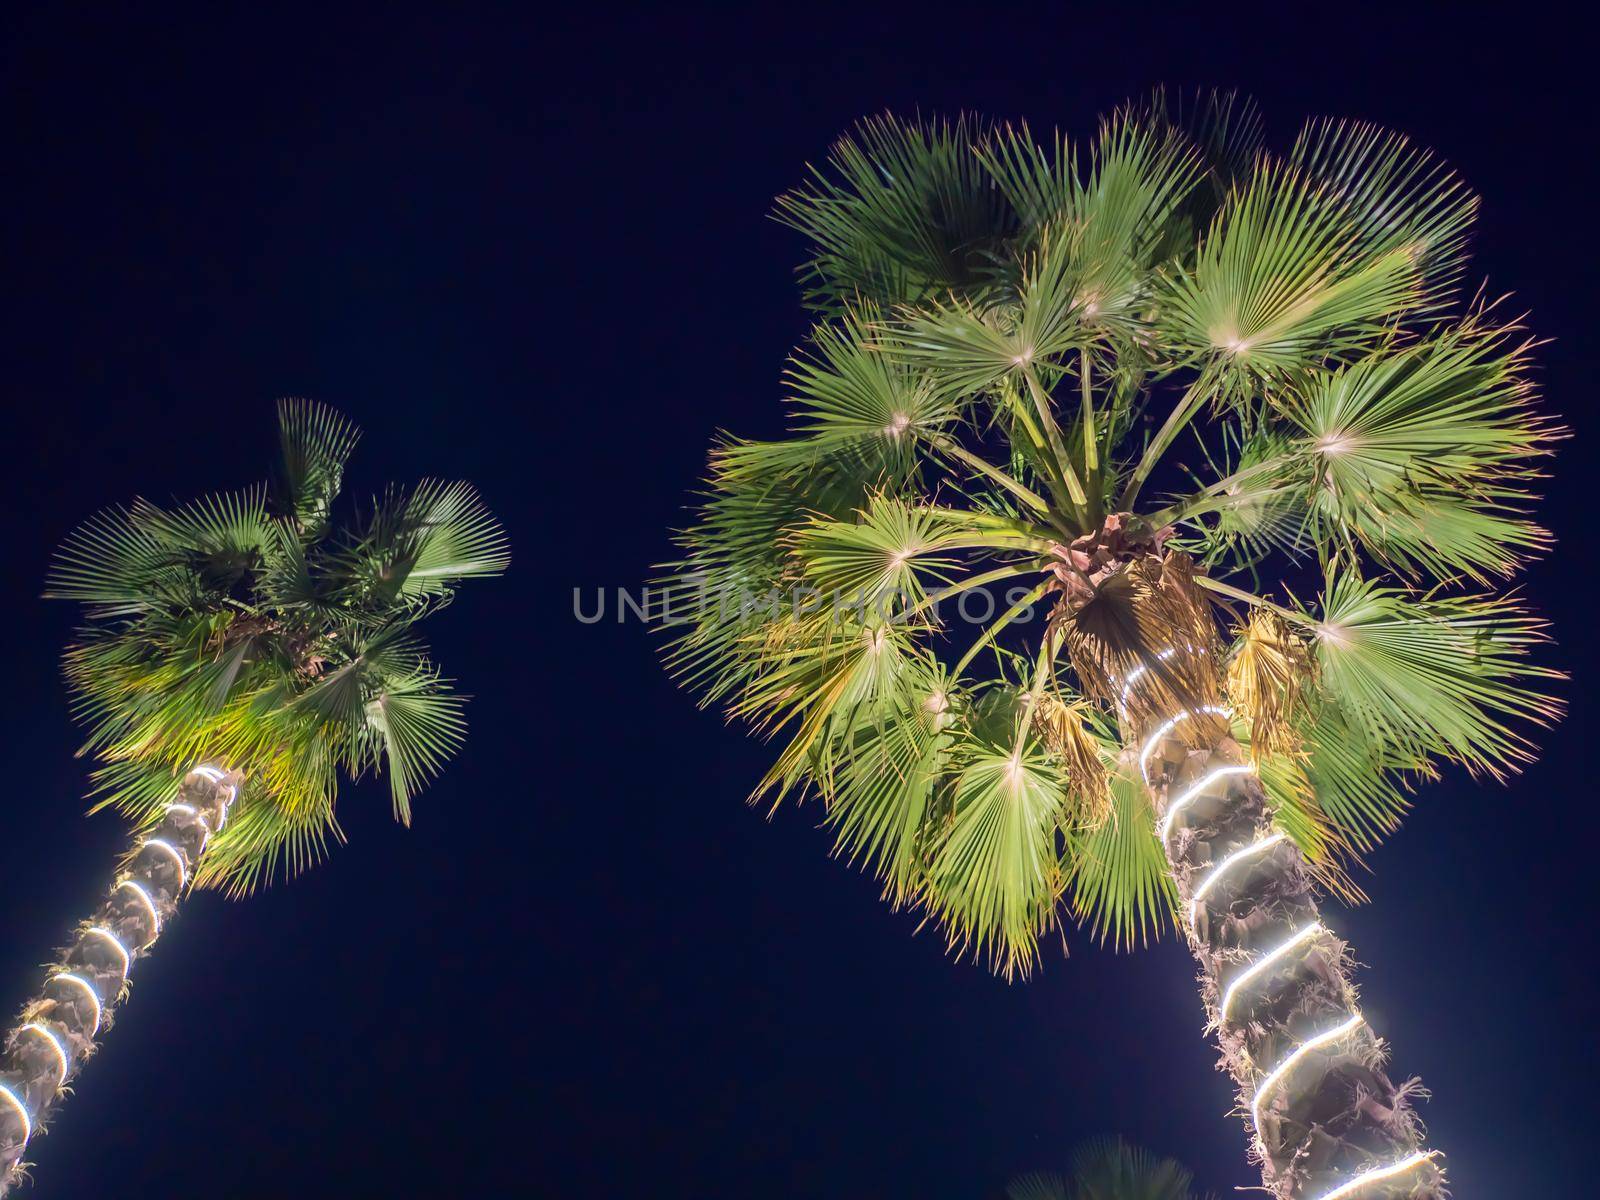 Christmas garlands and light illumination on a two palms tree at night. Dubai. by DovidPro